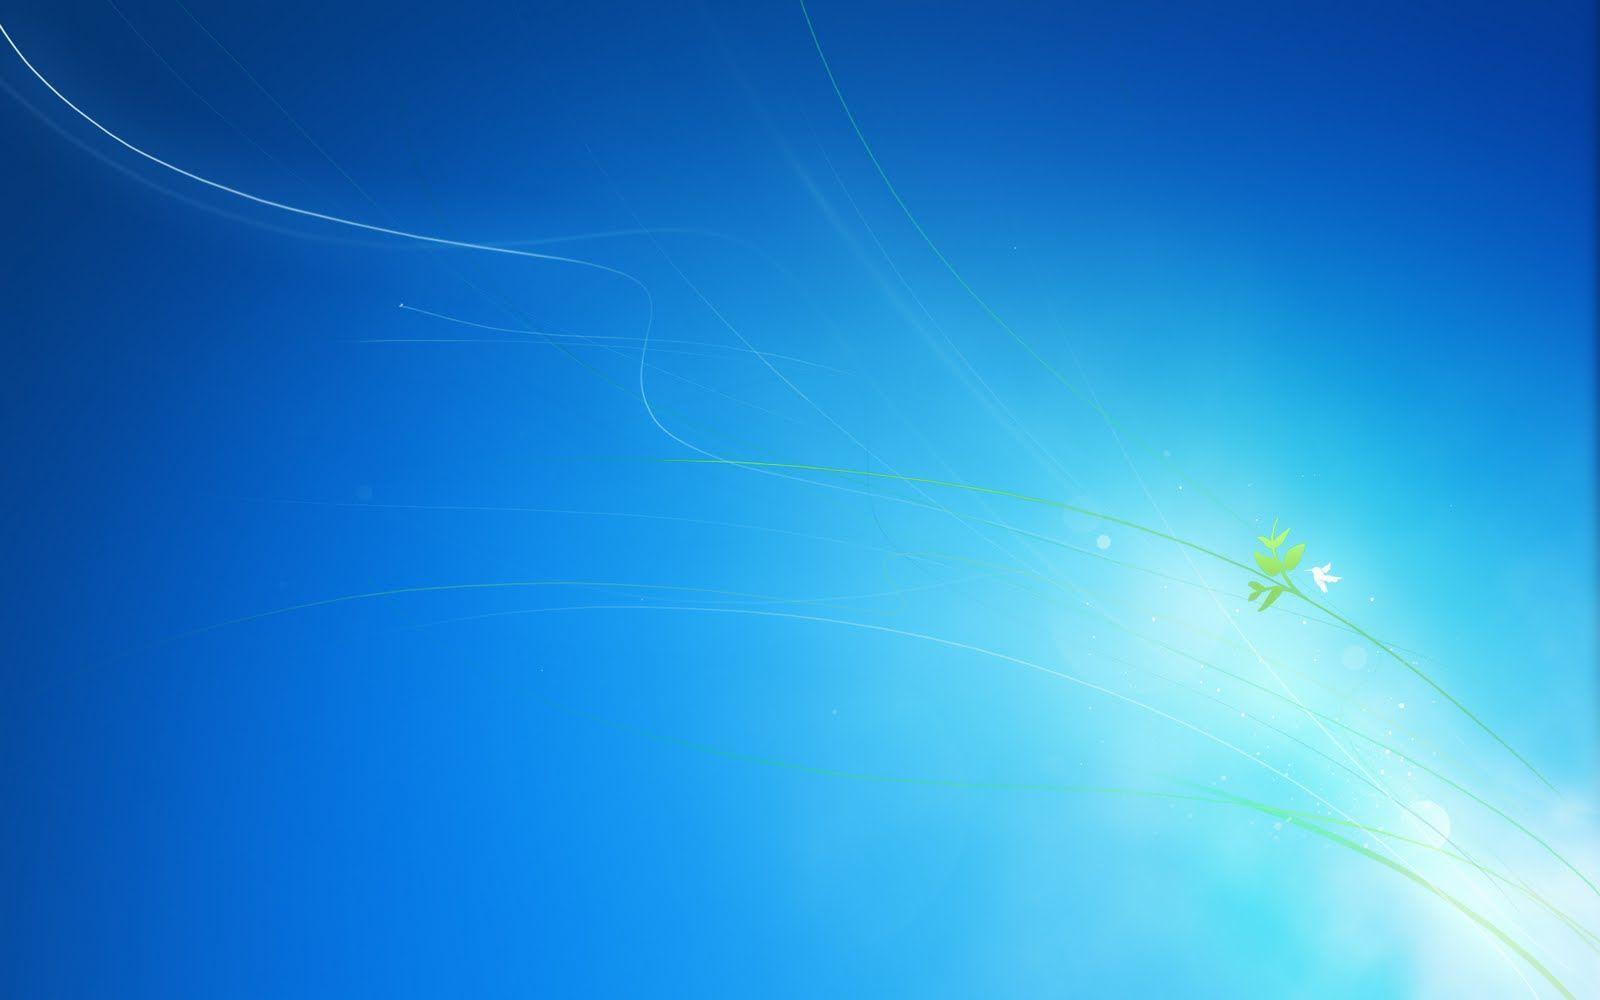 Cool Windows 7 Blue HD Background Wallpaper. CuteHDWall